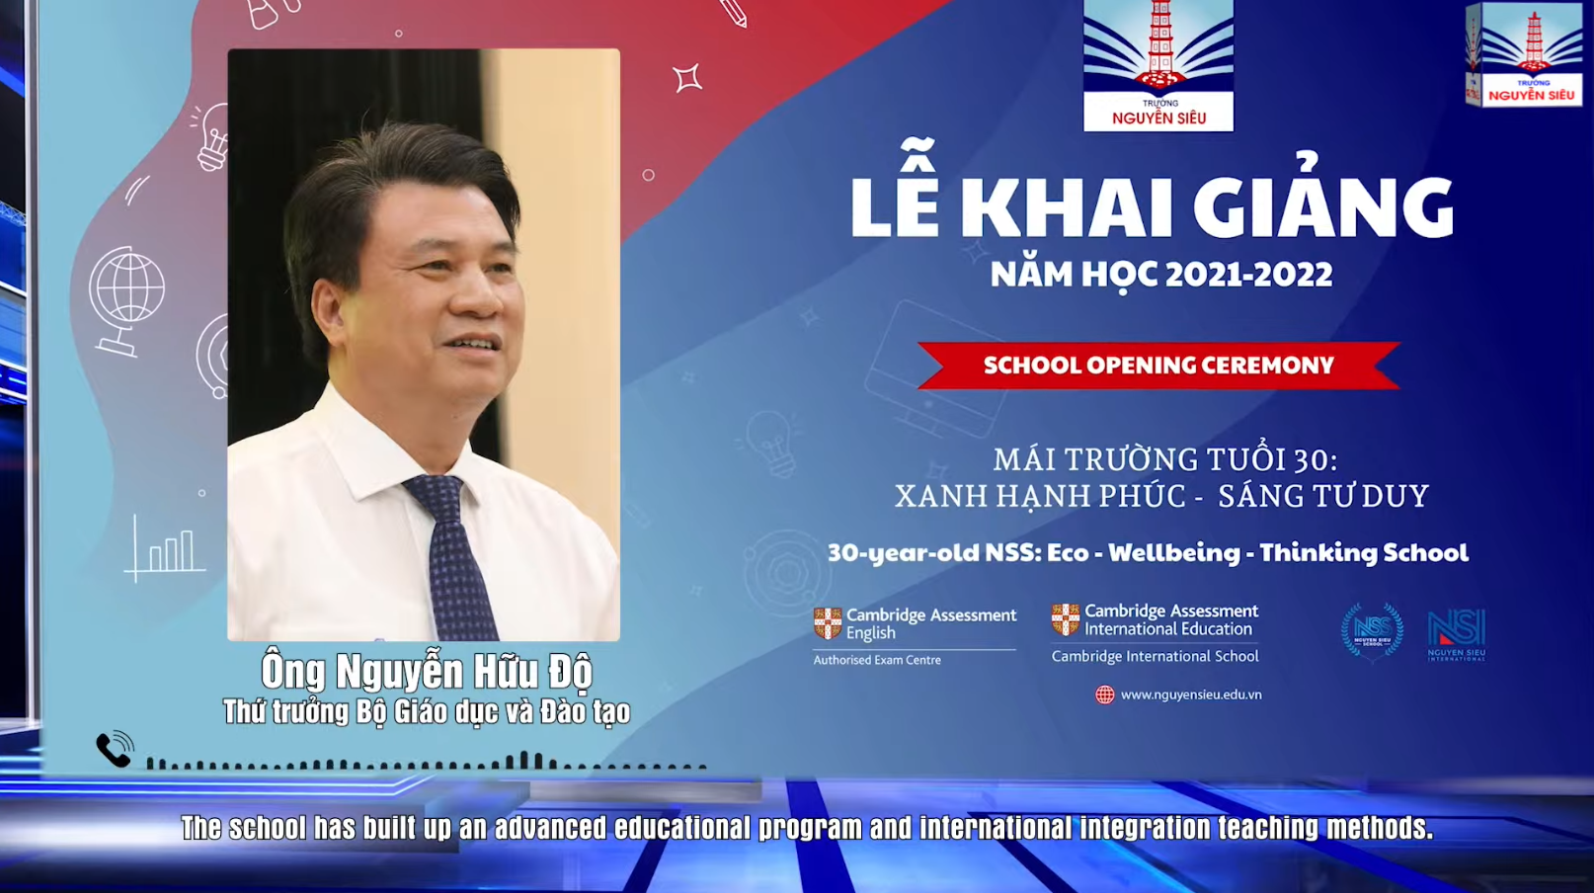 Dr. Nguyen Huu Do - Deputy Minister of Education and Training - Congratulates Nguyen Sieu School.